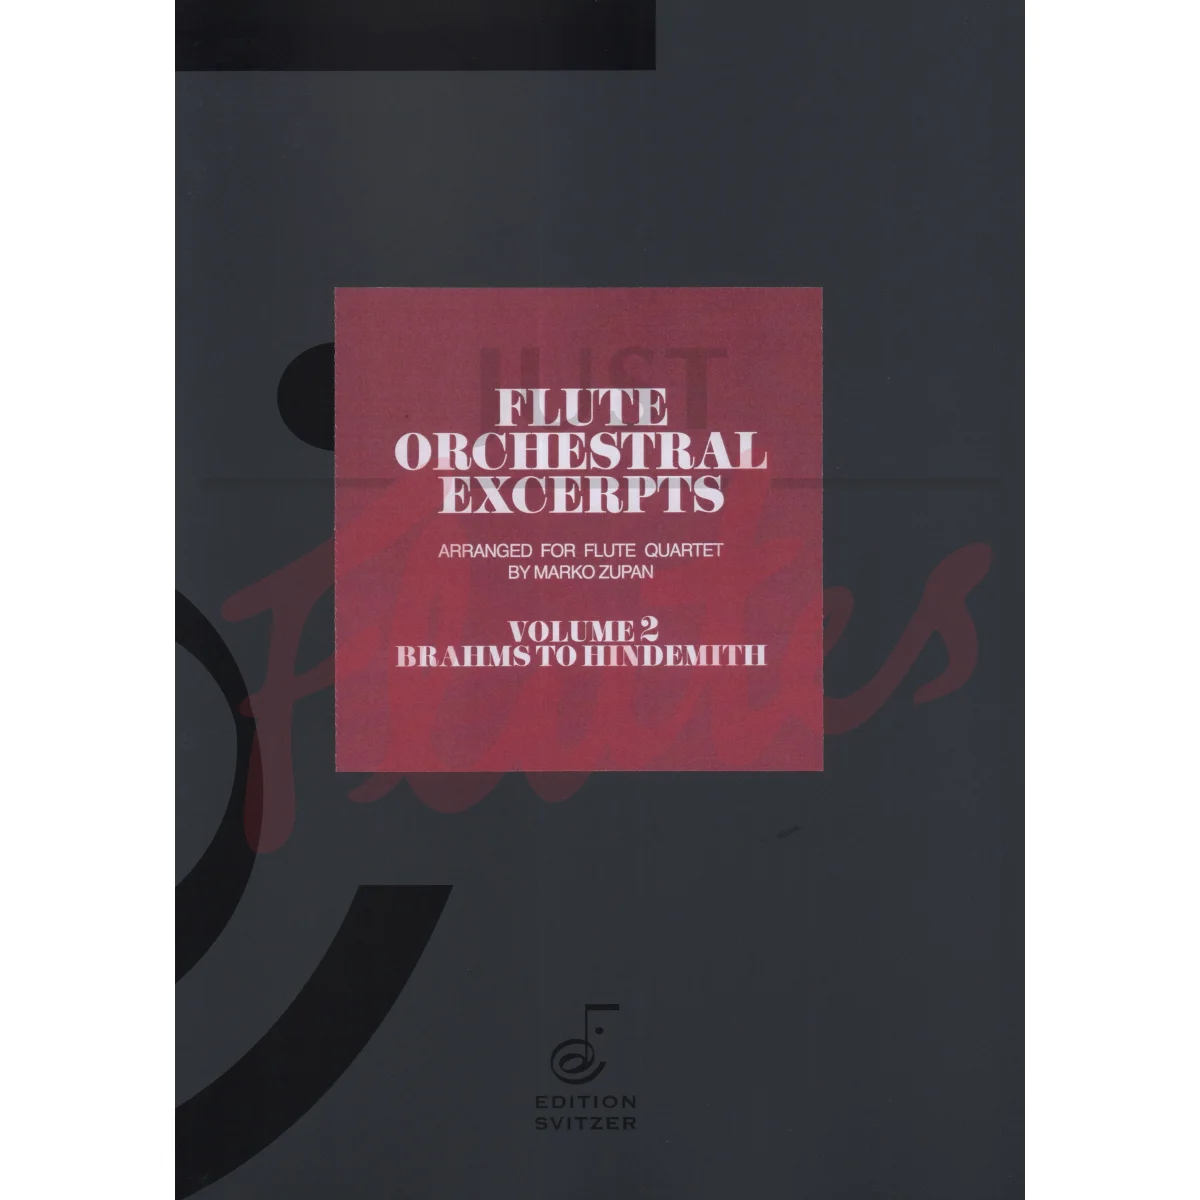 Flute Orchestral Excerpts Volume 2 (arranged for Flute Quartet)